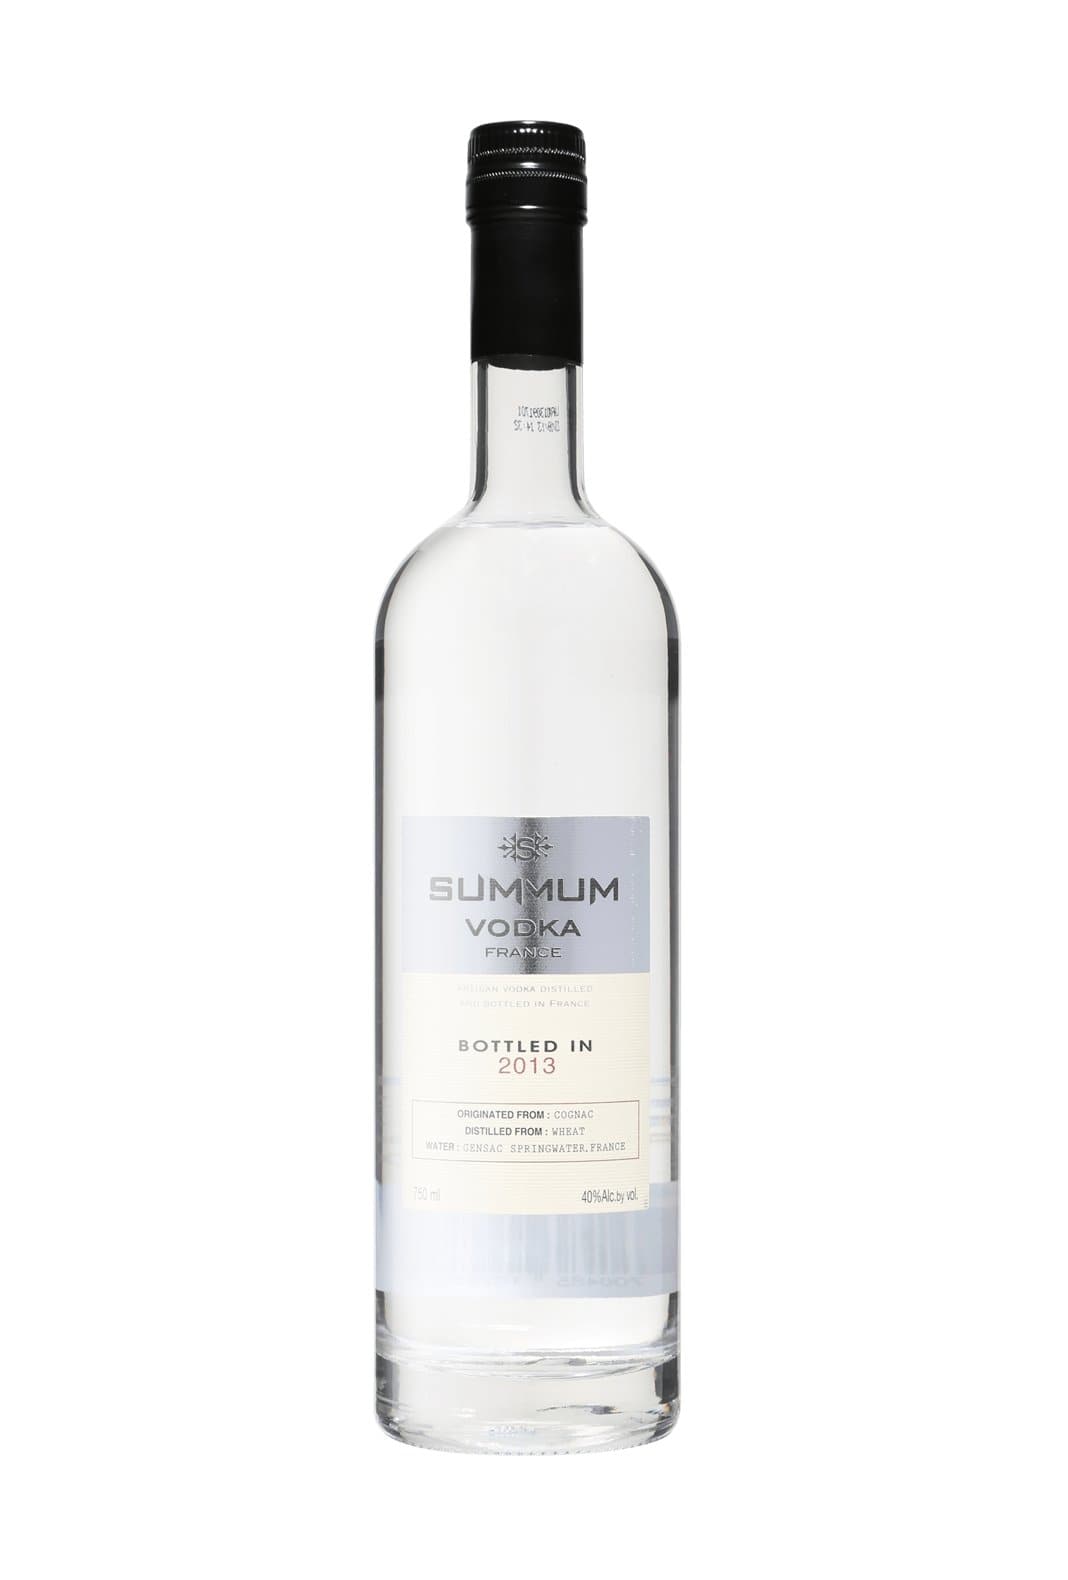 Summum Vodka (Distilled from Wheat) 40% 750ml | Vodka | Shop online at Spirits of France